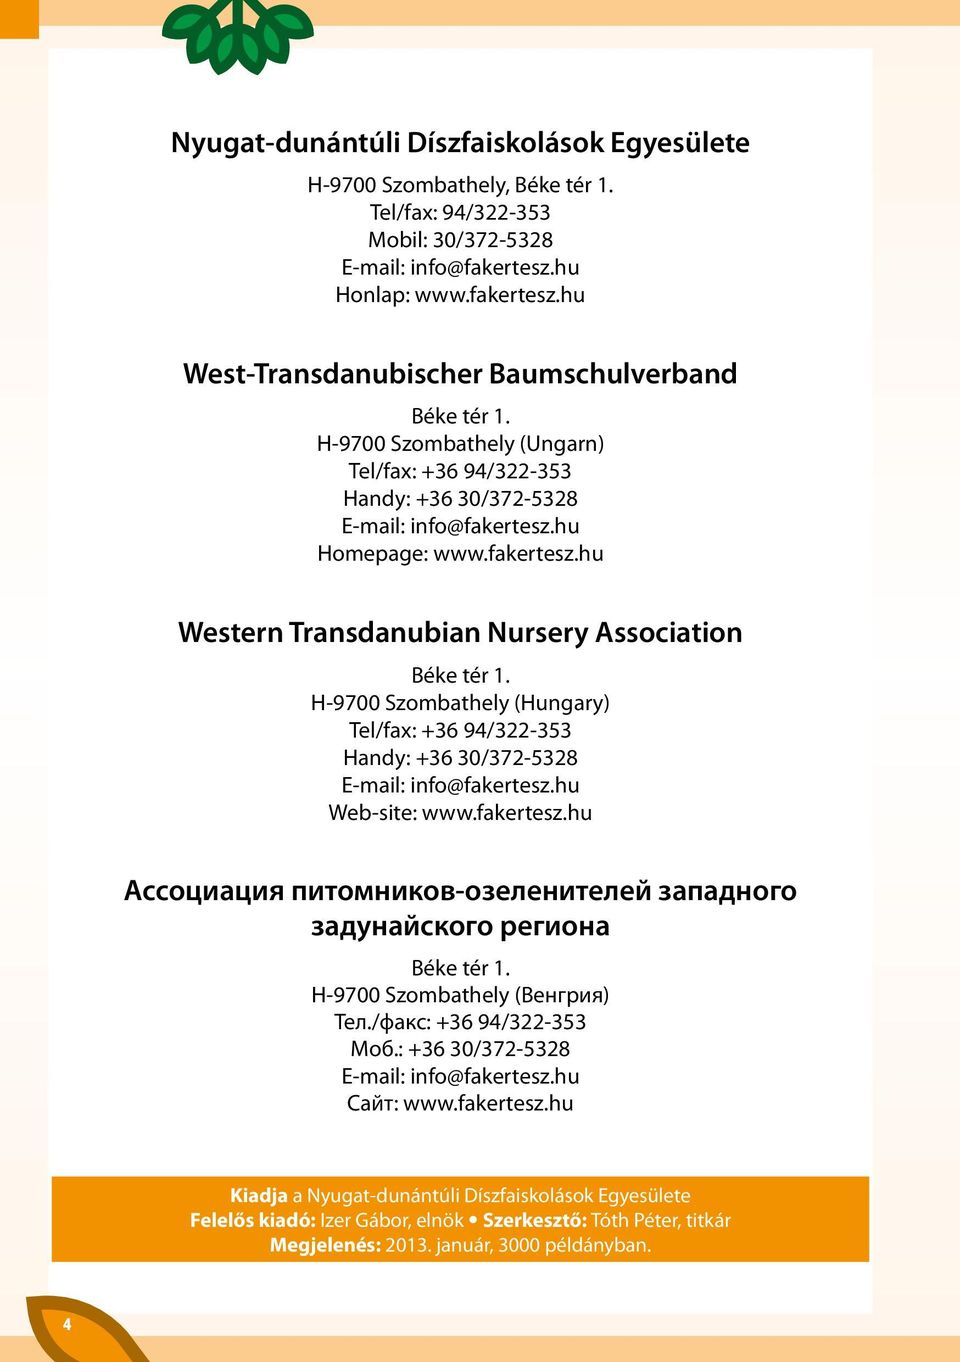 H-9700 Szombathely (Hungary) Tel/fax: +36 94/322-353 Handy: +36 30/372-5328 E-mail: info@fakertesz.hu Web-site: www.fakertesz.hu Ассоциация питомников-озеленителей западного задунайского региона Béke tér 1.